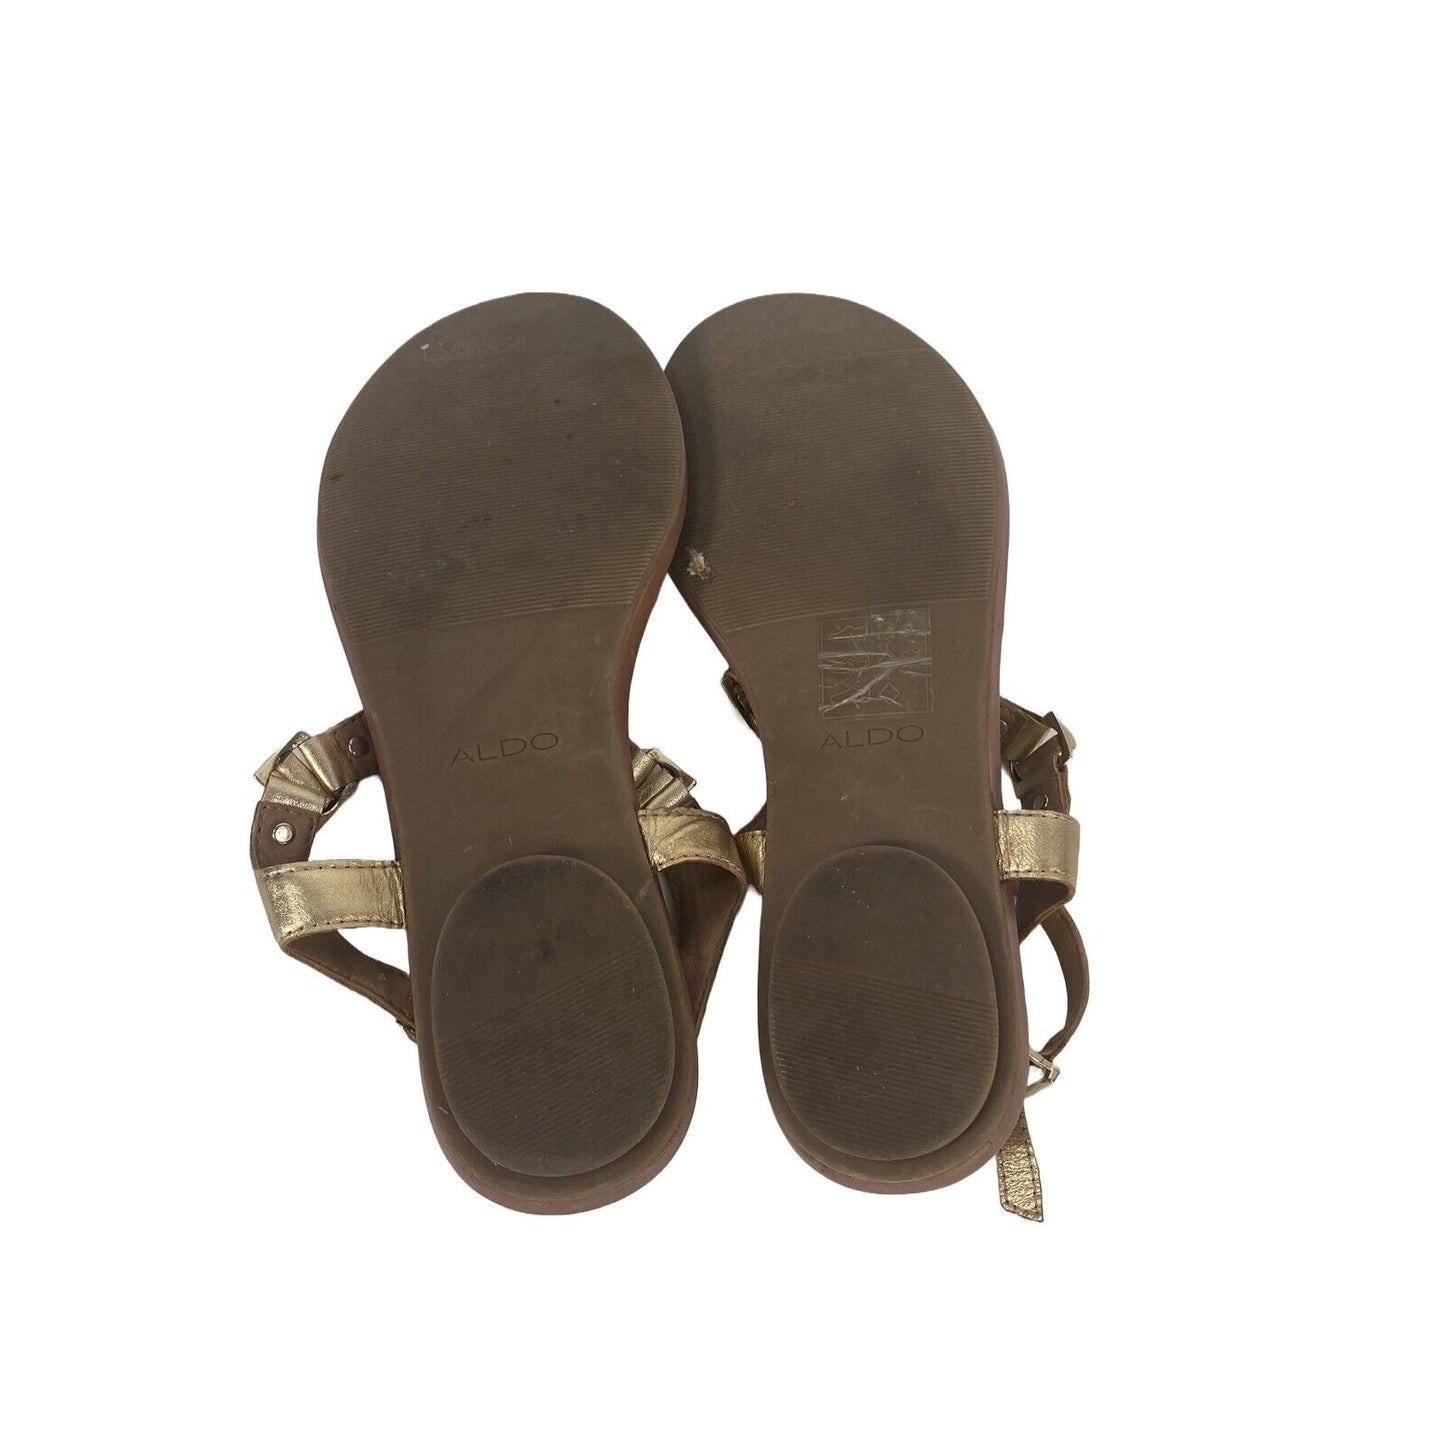 Aldo Women's Gold Leather Slingback Thong Sandals - 7.5